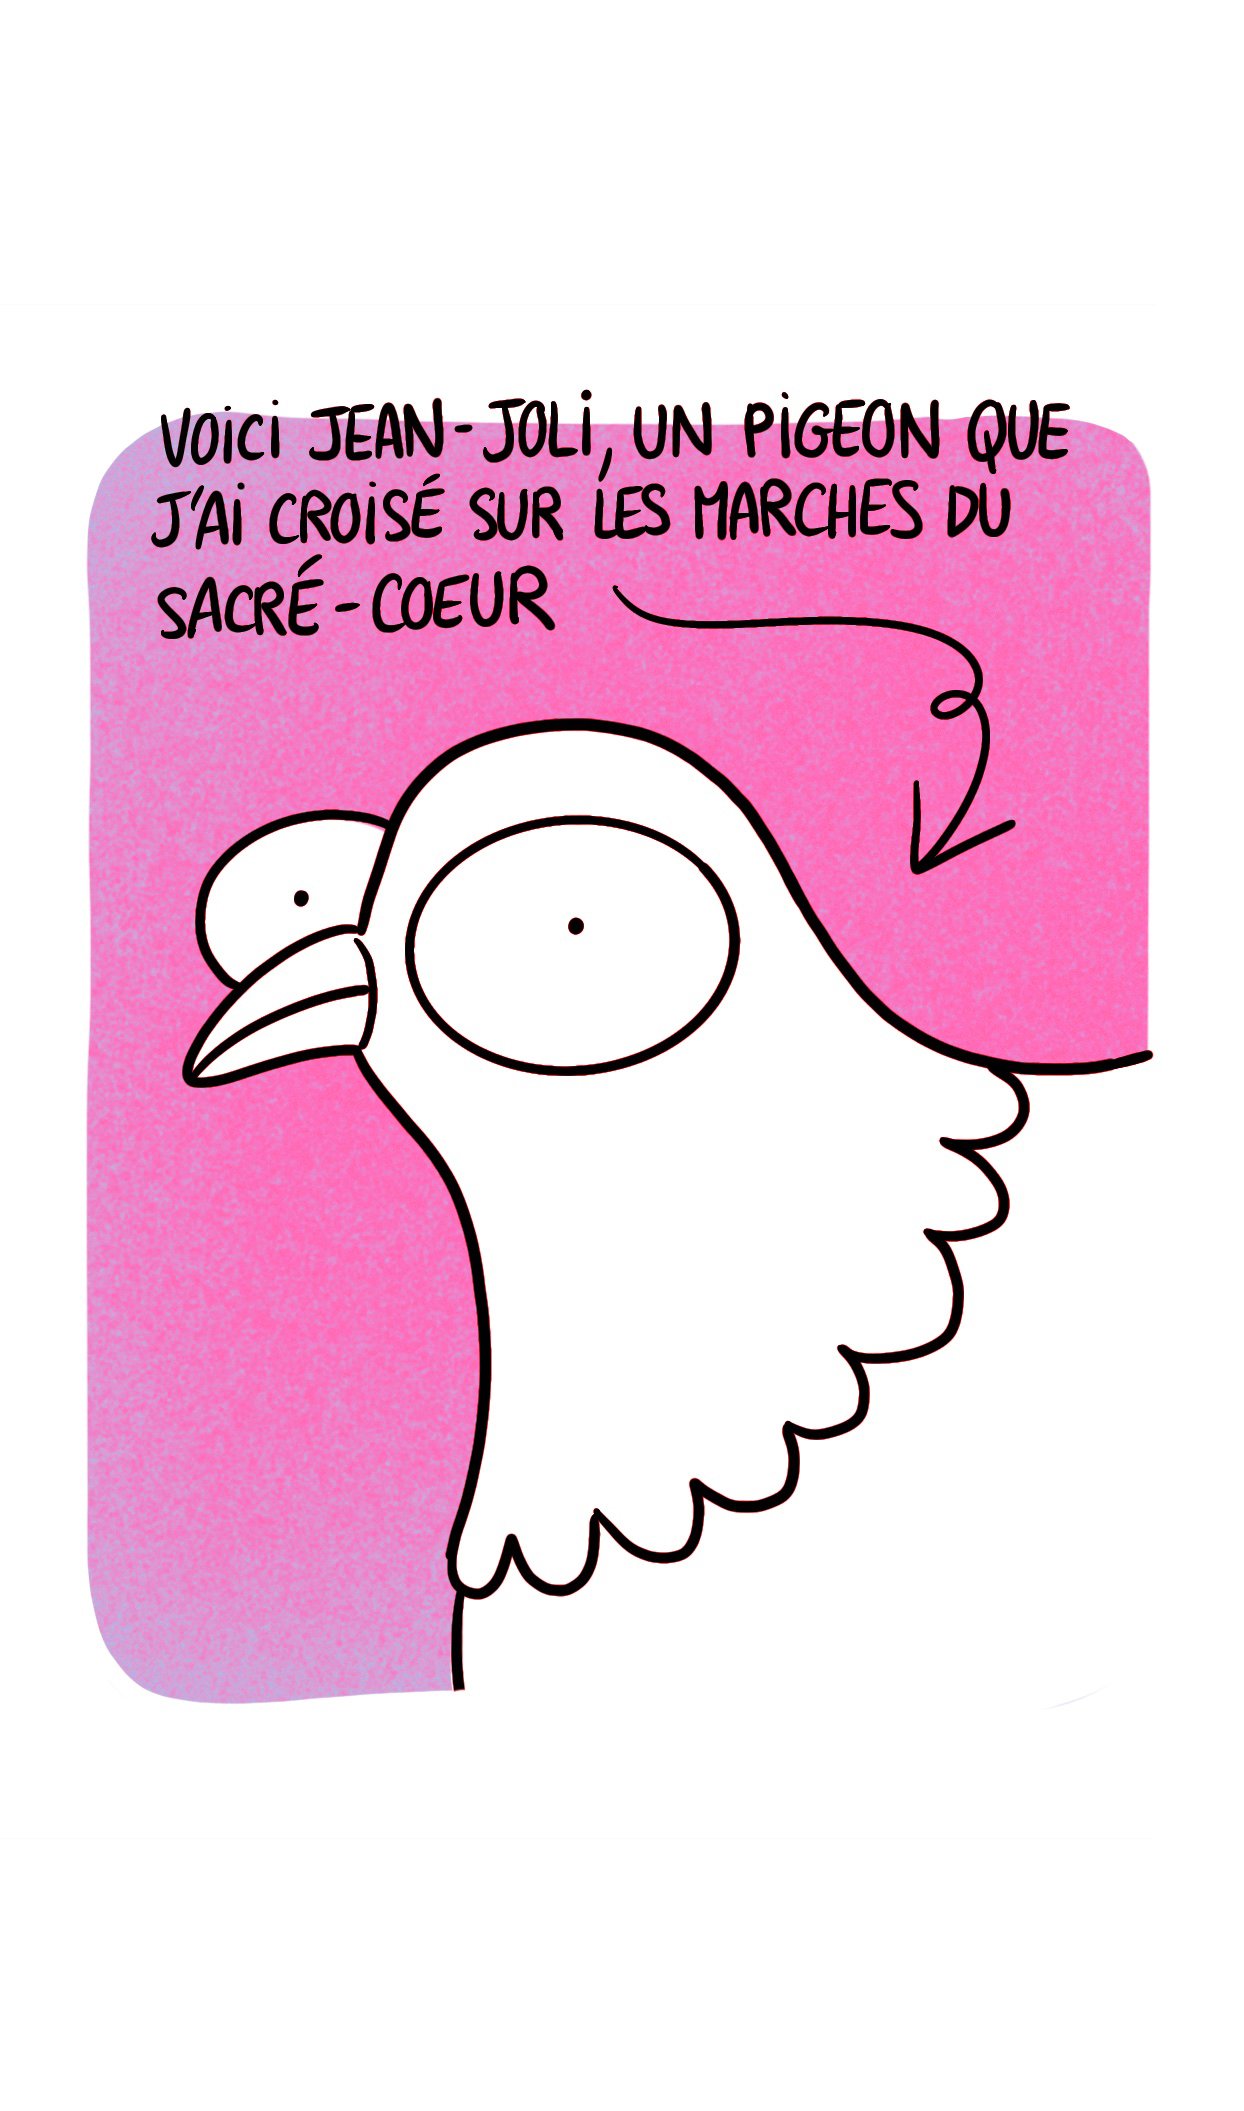 Jean-Joli le pigeon